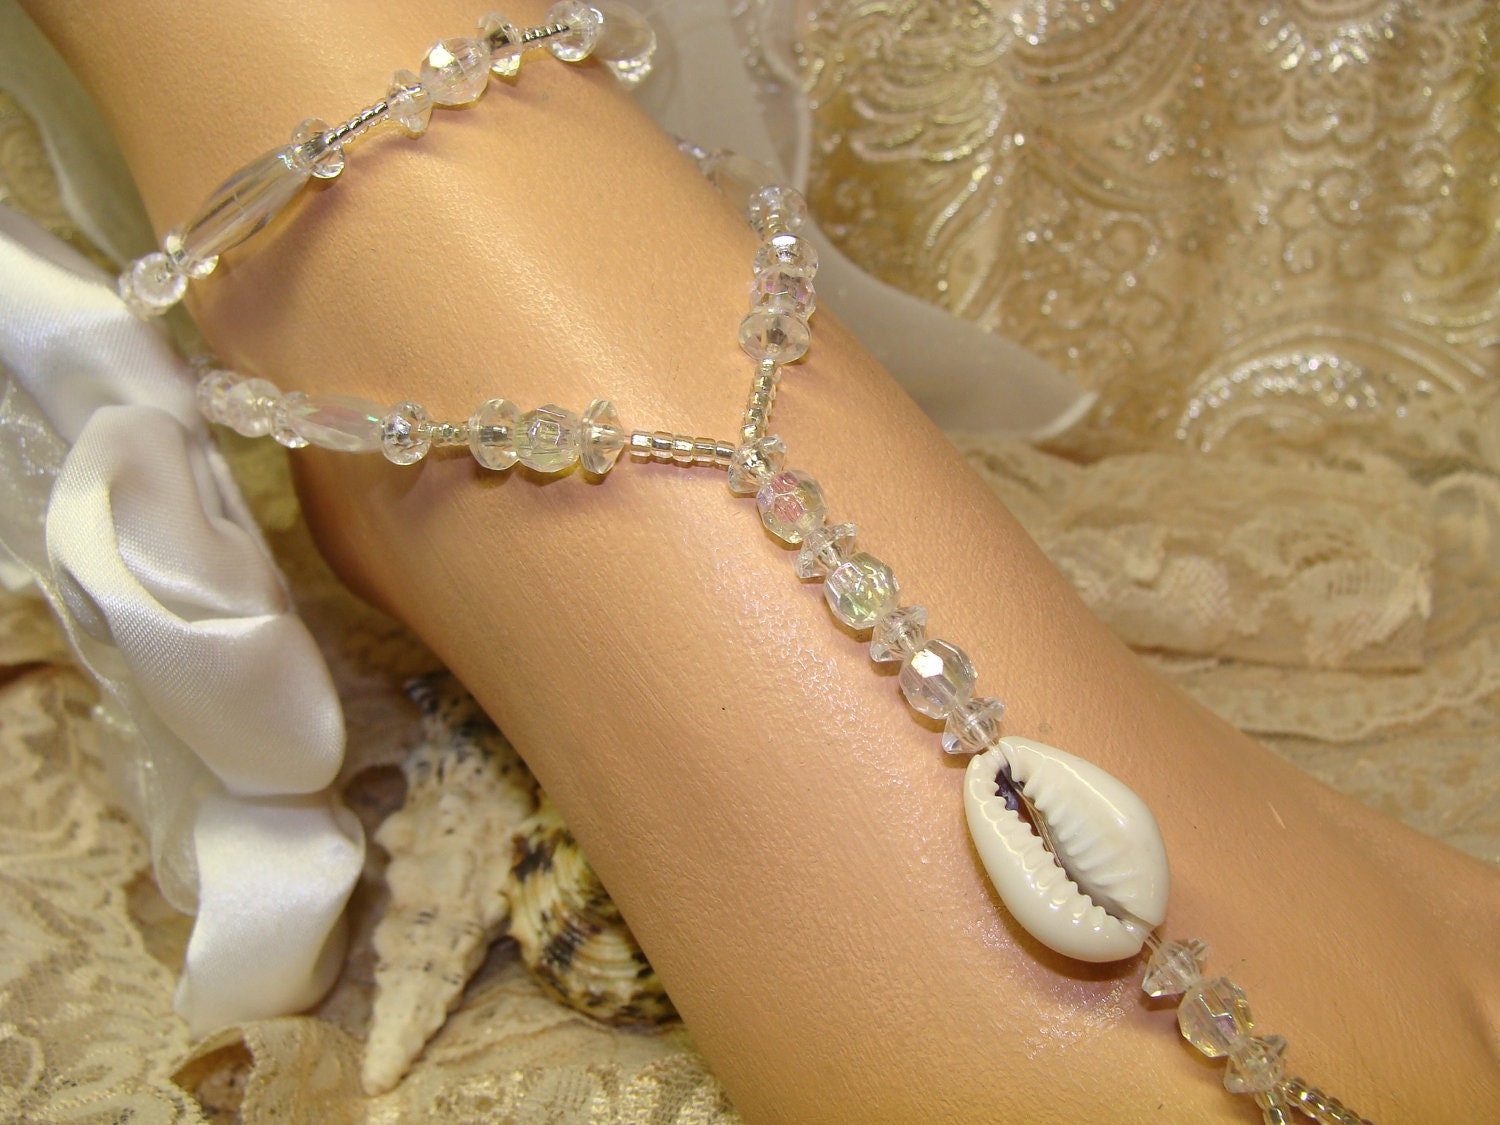 Reflective Cowrie Shell Beach Wedding Barefoot Jewelry Sandals